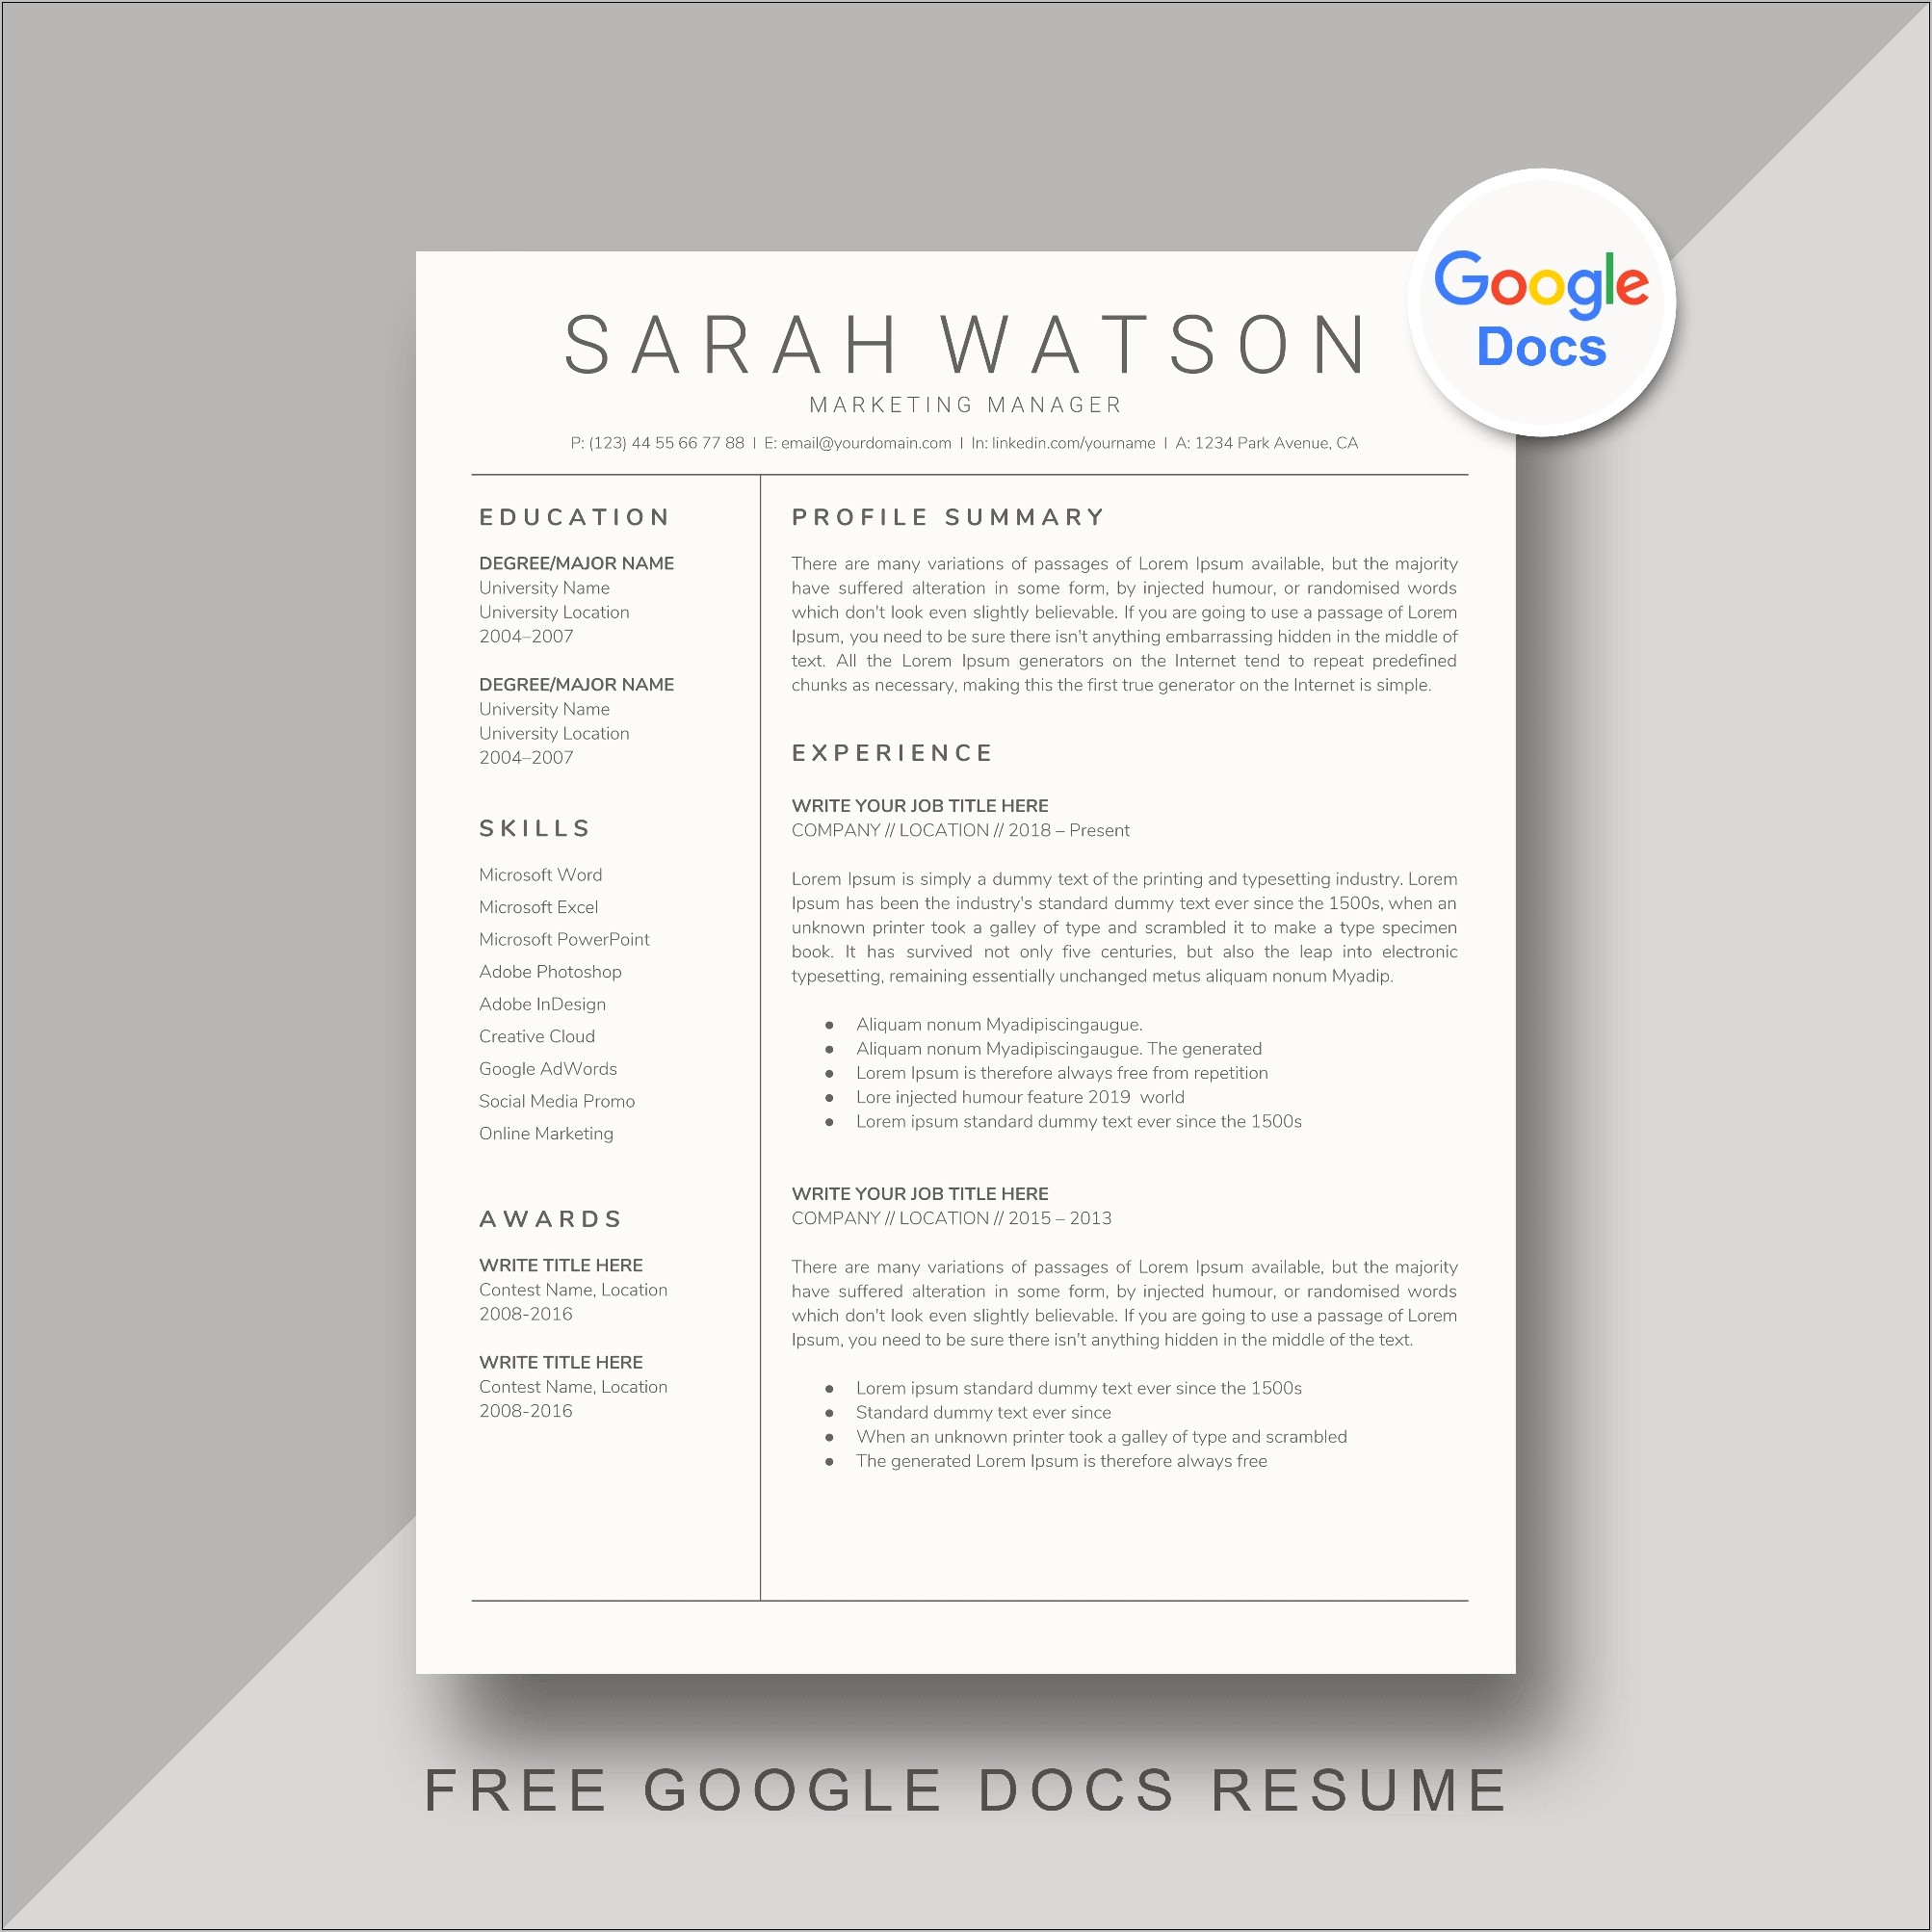 Free Resume Google Docs Downloads